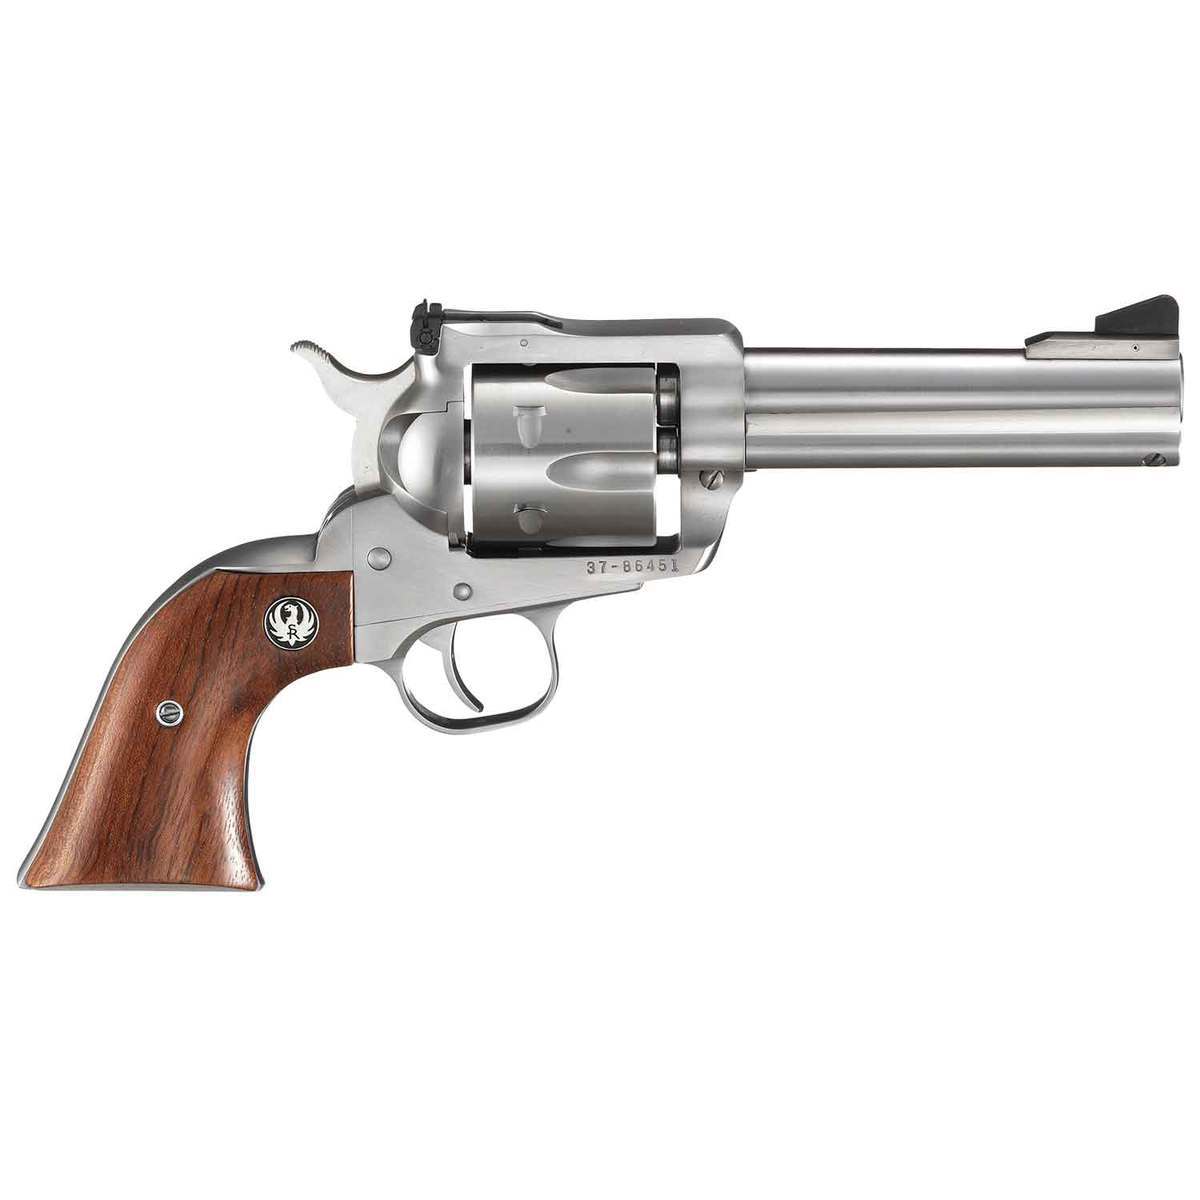 Ruger New Model Blackhawk 357 Magnum Stainless Revolver - 6 Rounds ...